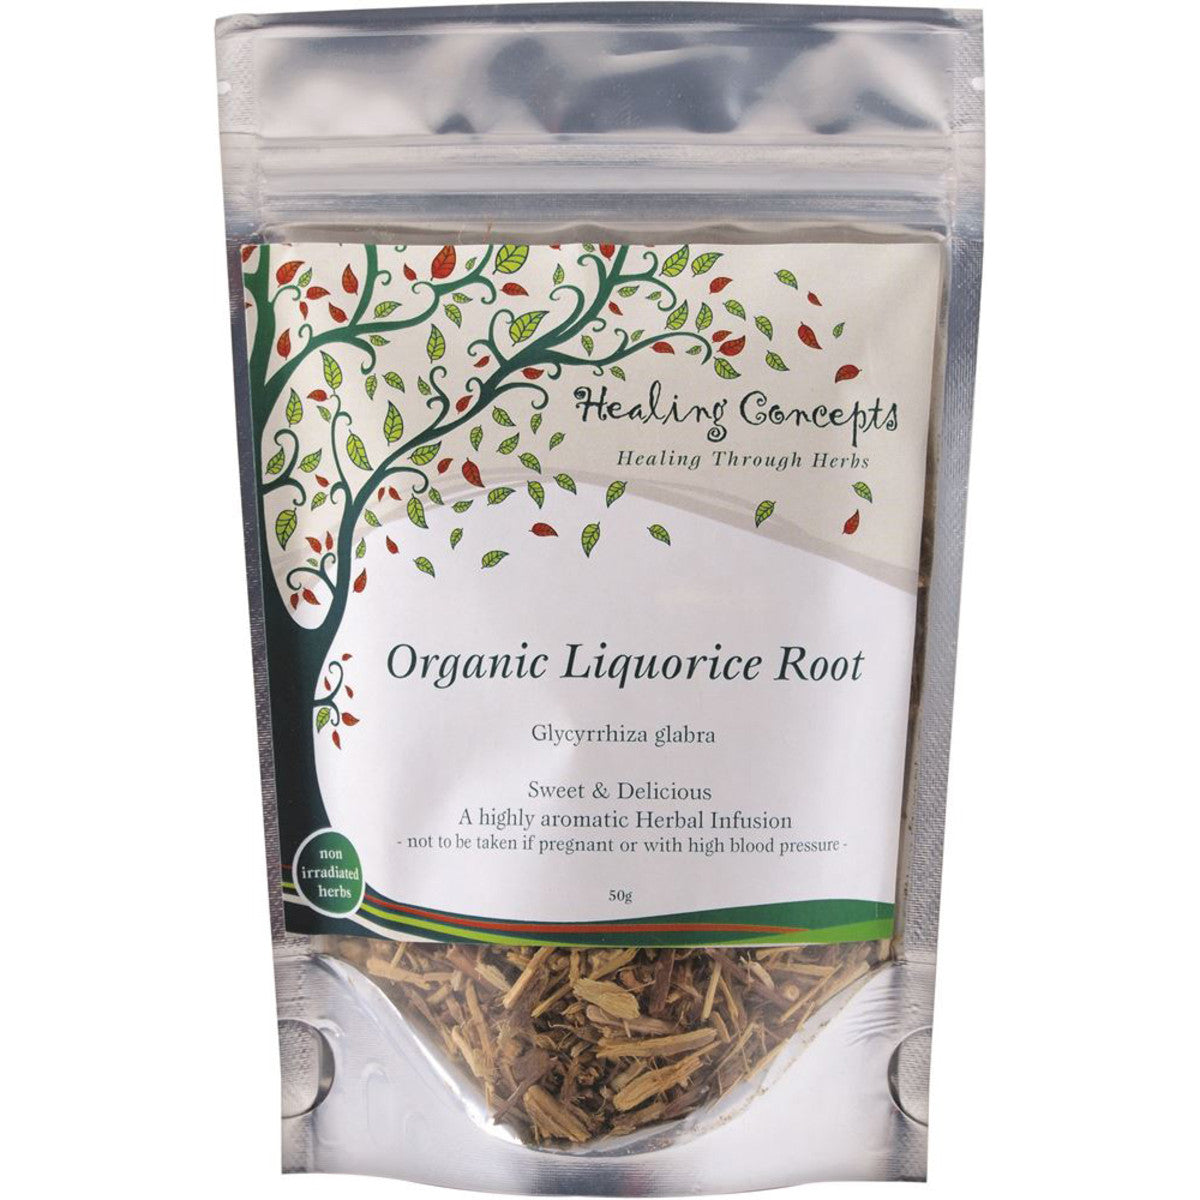 Healing Concepts Liquorice Root Tea 50g, Certified Organic (Licorice)